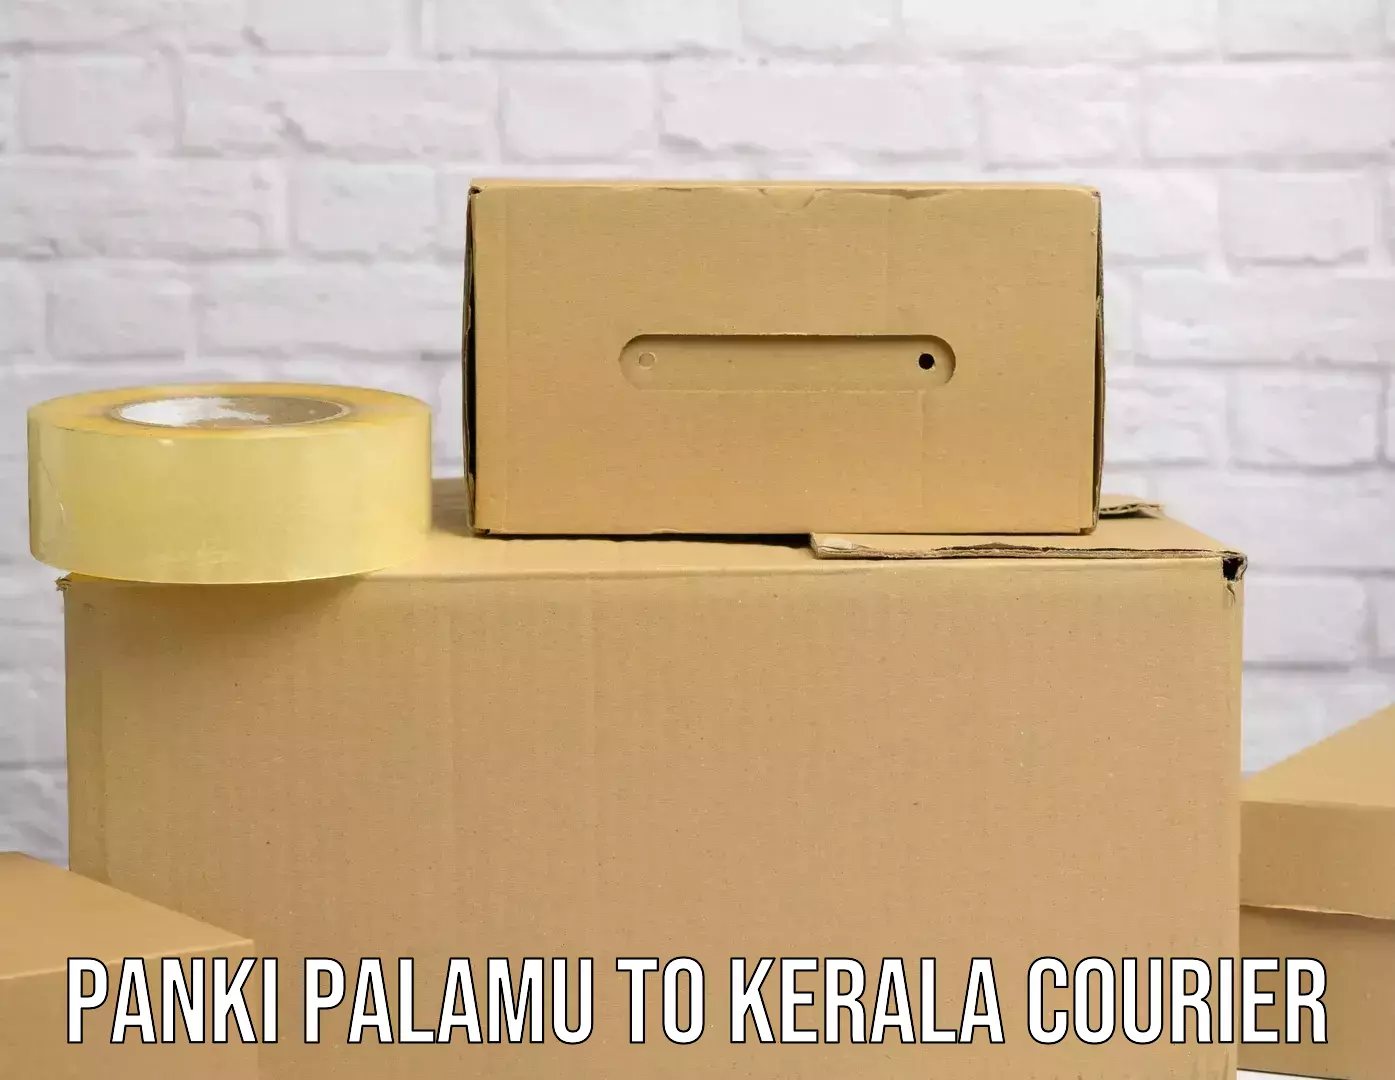 Efficient parcel tracking Panki Palamu to Mahe